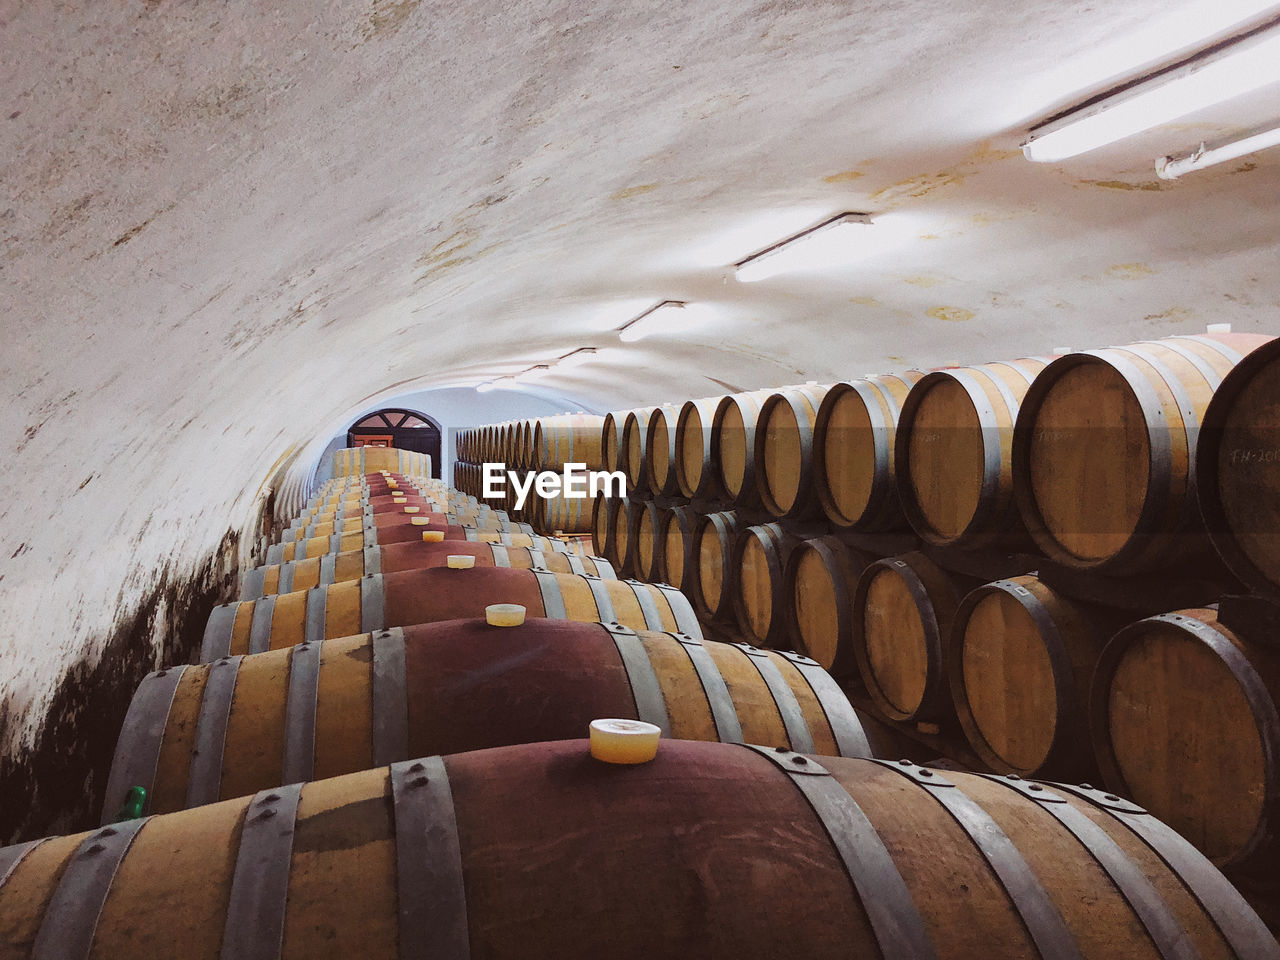 Row of wine barrels in wine cellar 